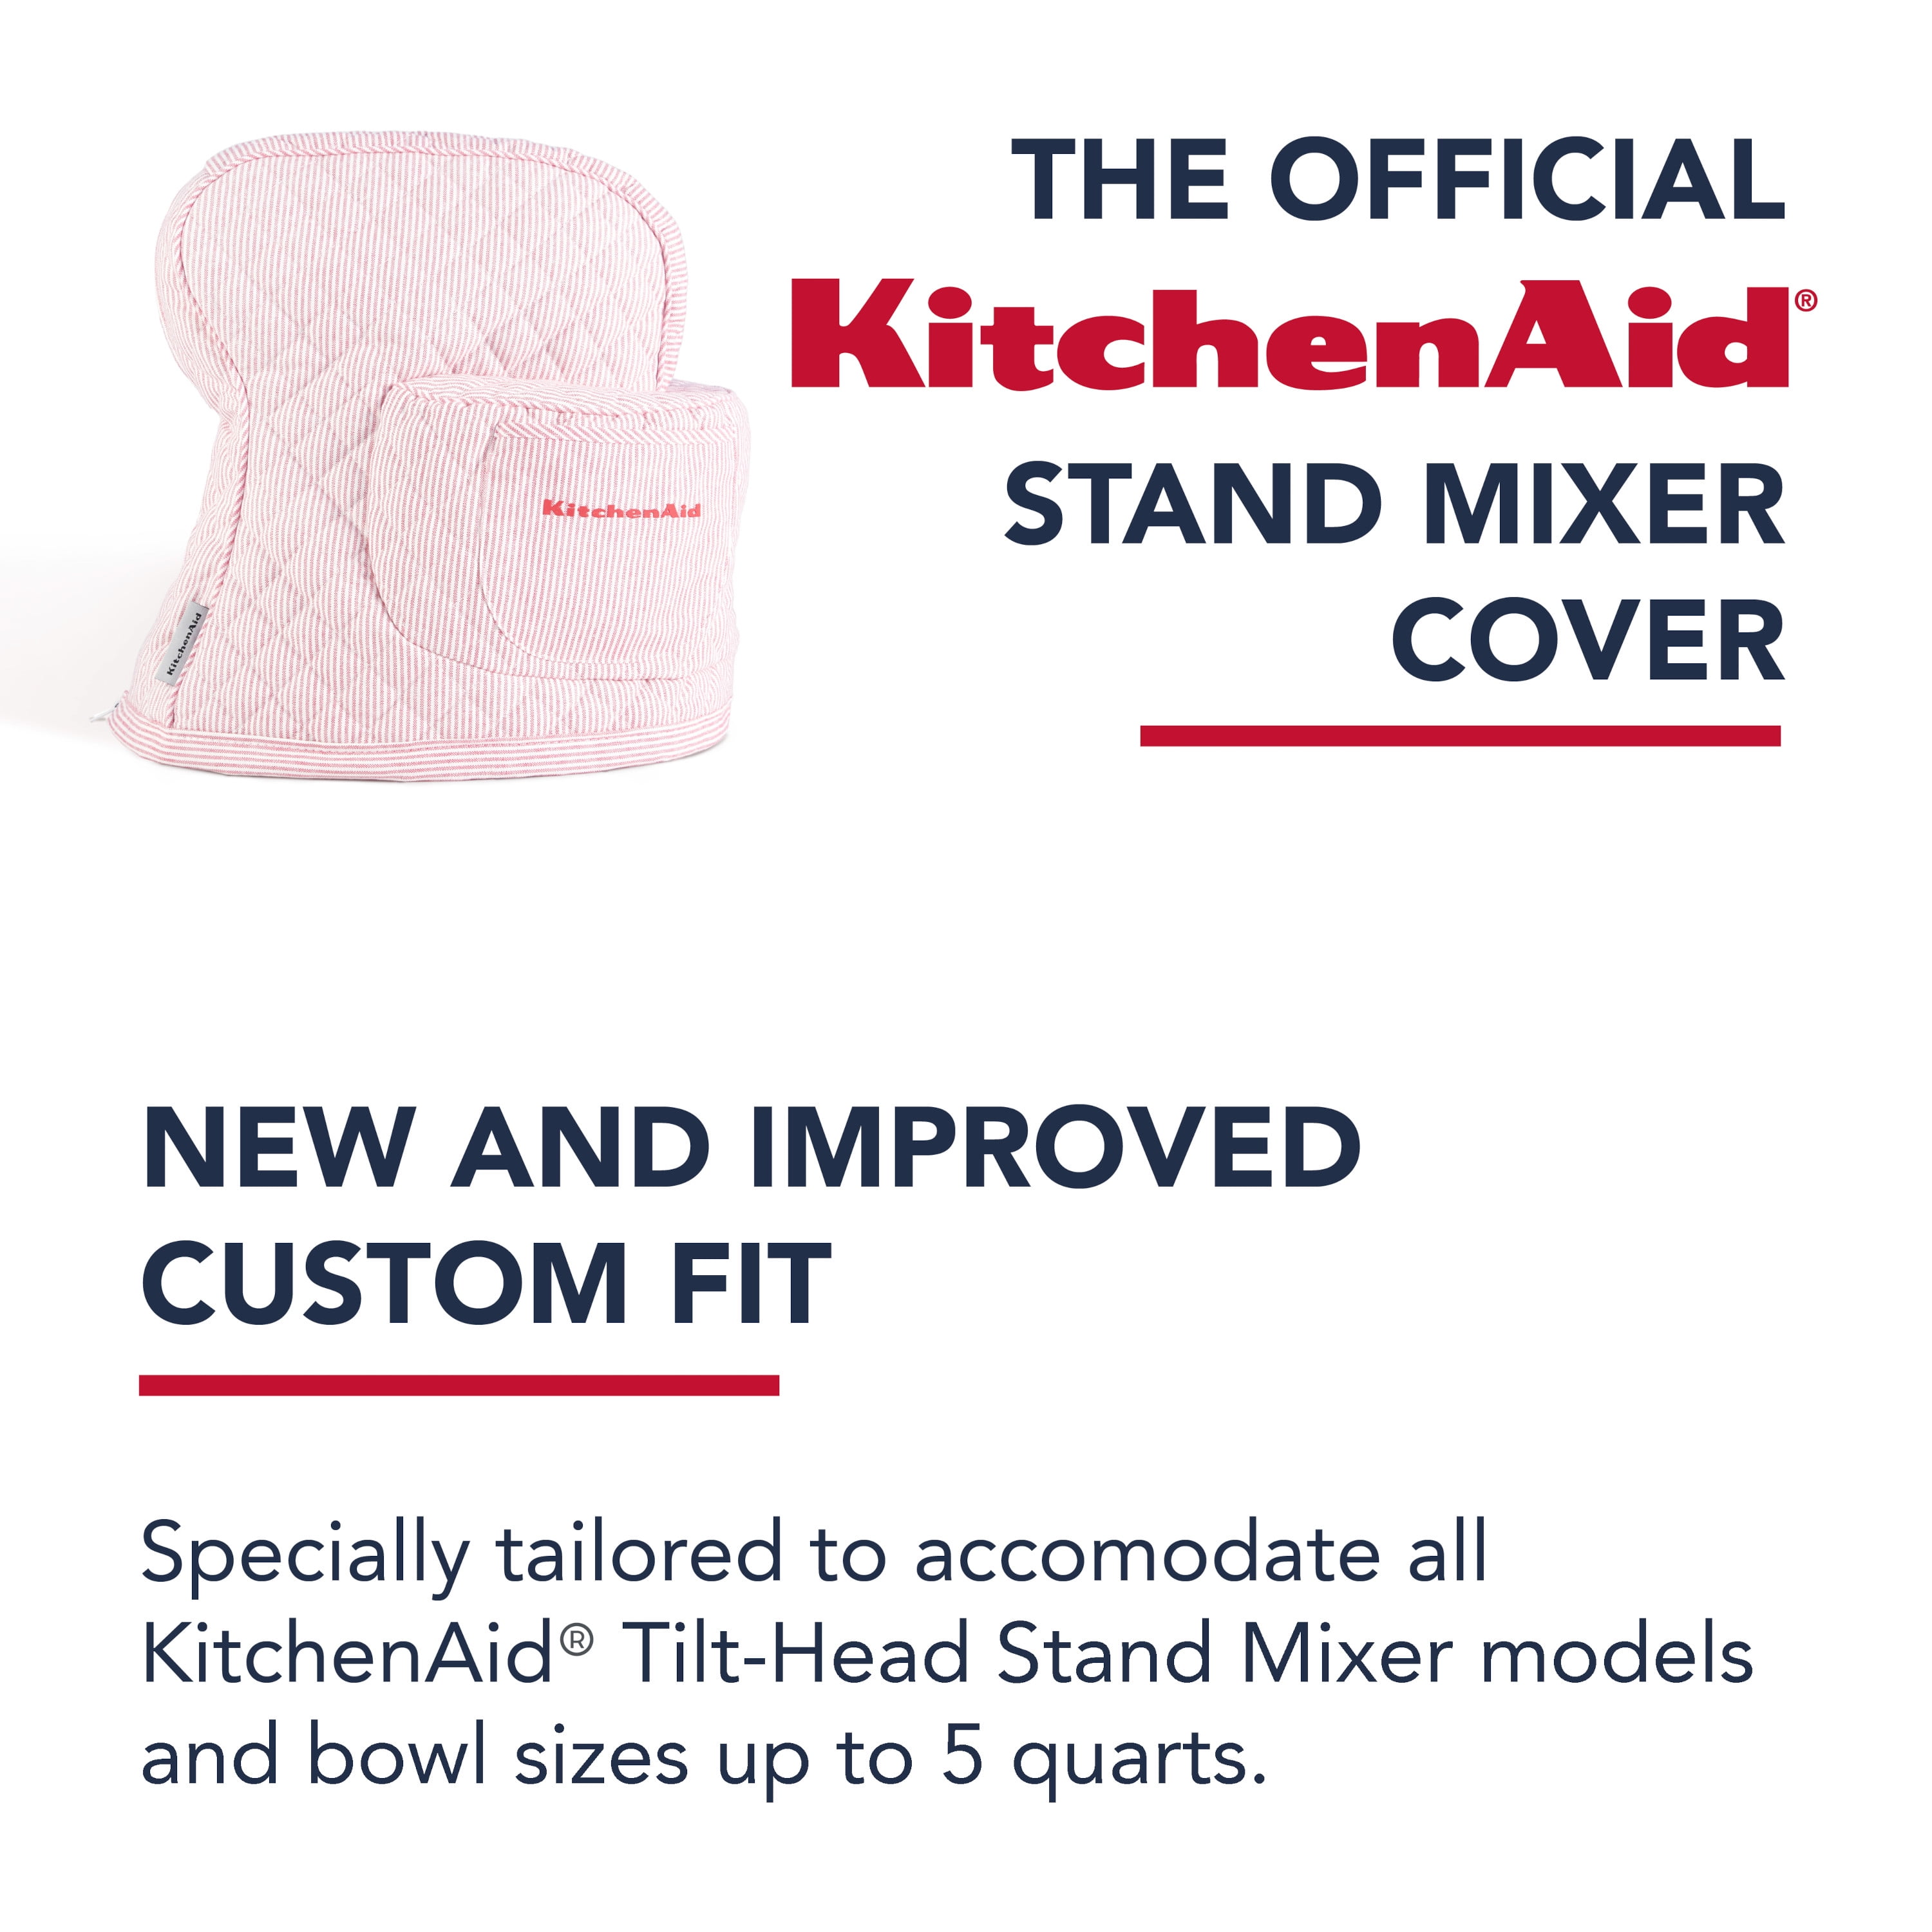 TUYU Kitchen Aid Mixer Coverkitchen Mixer Cover Compatible with 6-8 Quarts Kitchenaid/Hamilton Stand Mixerstand Mixer Coversdust Cover for Kitchen Aid